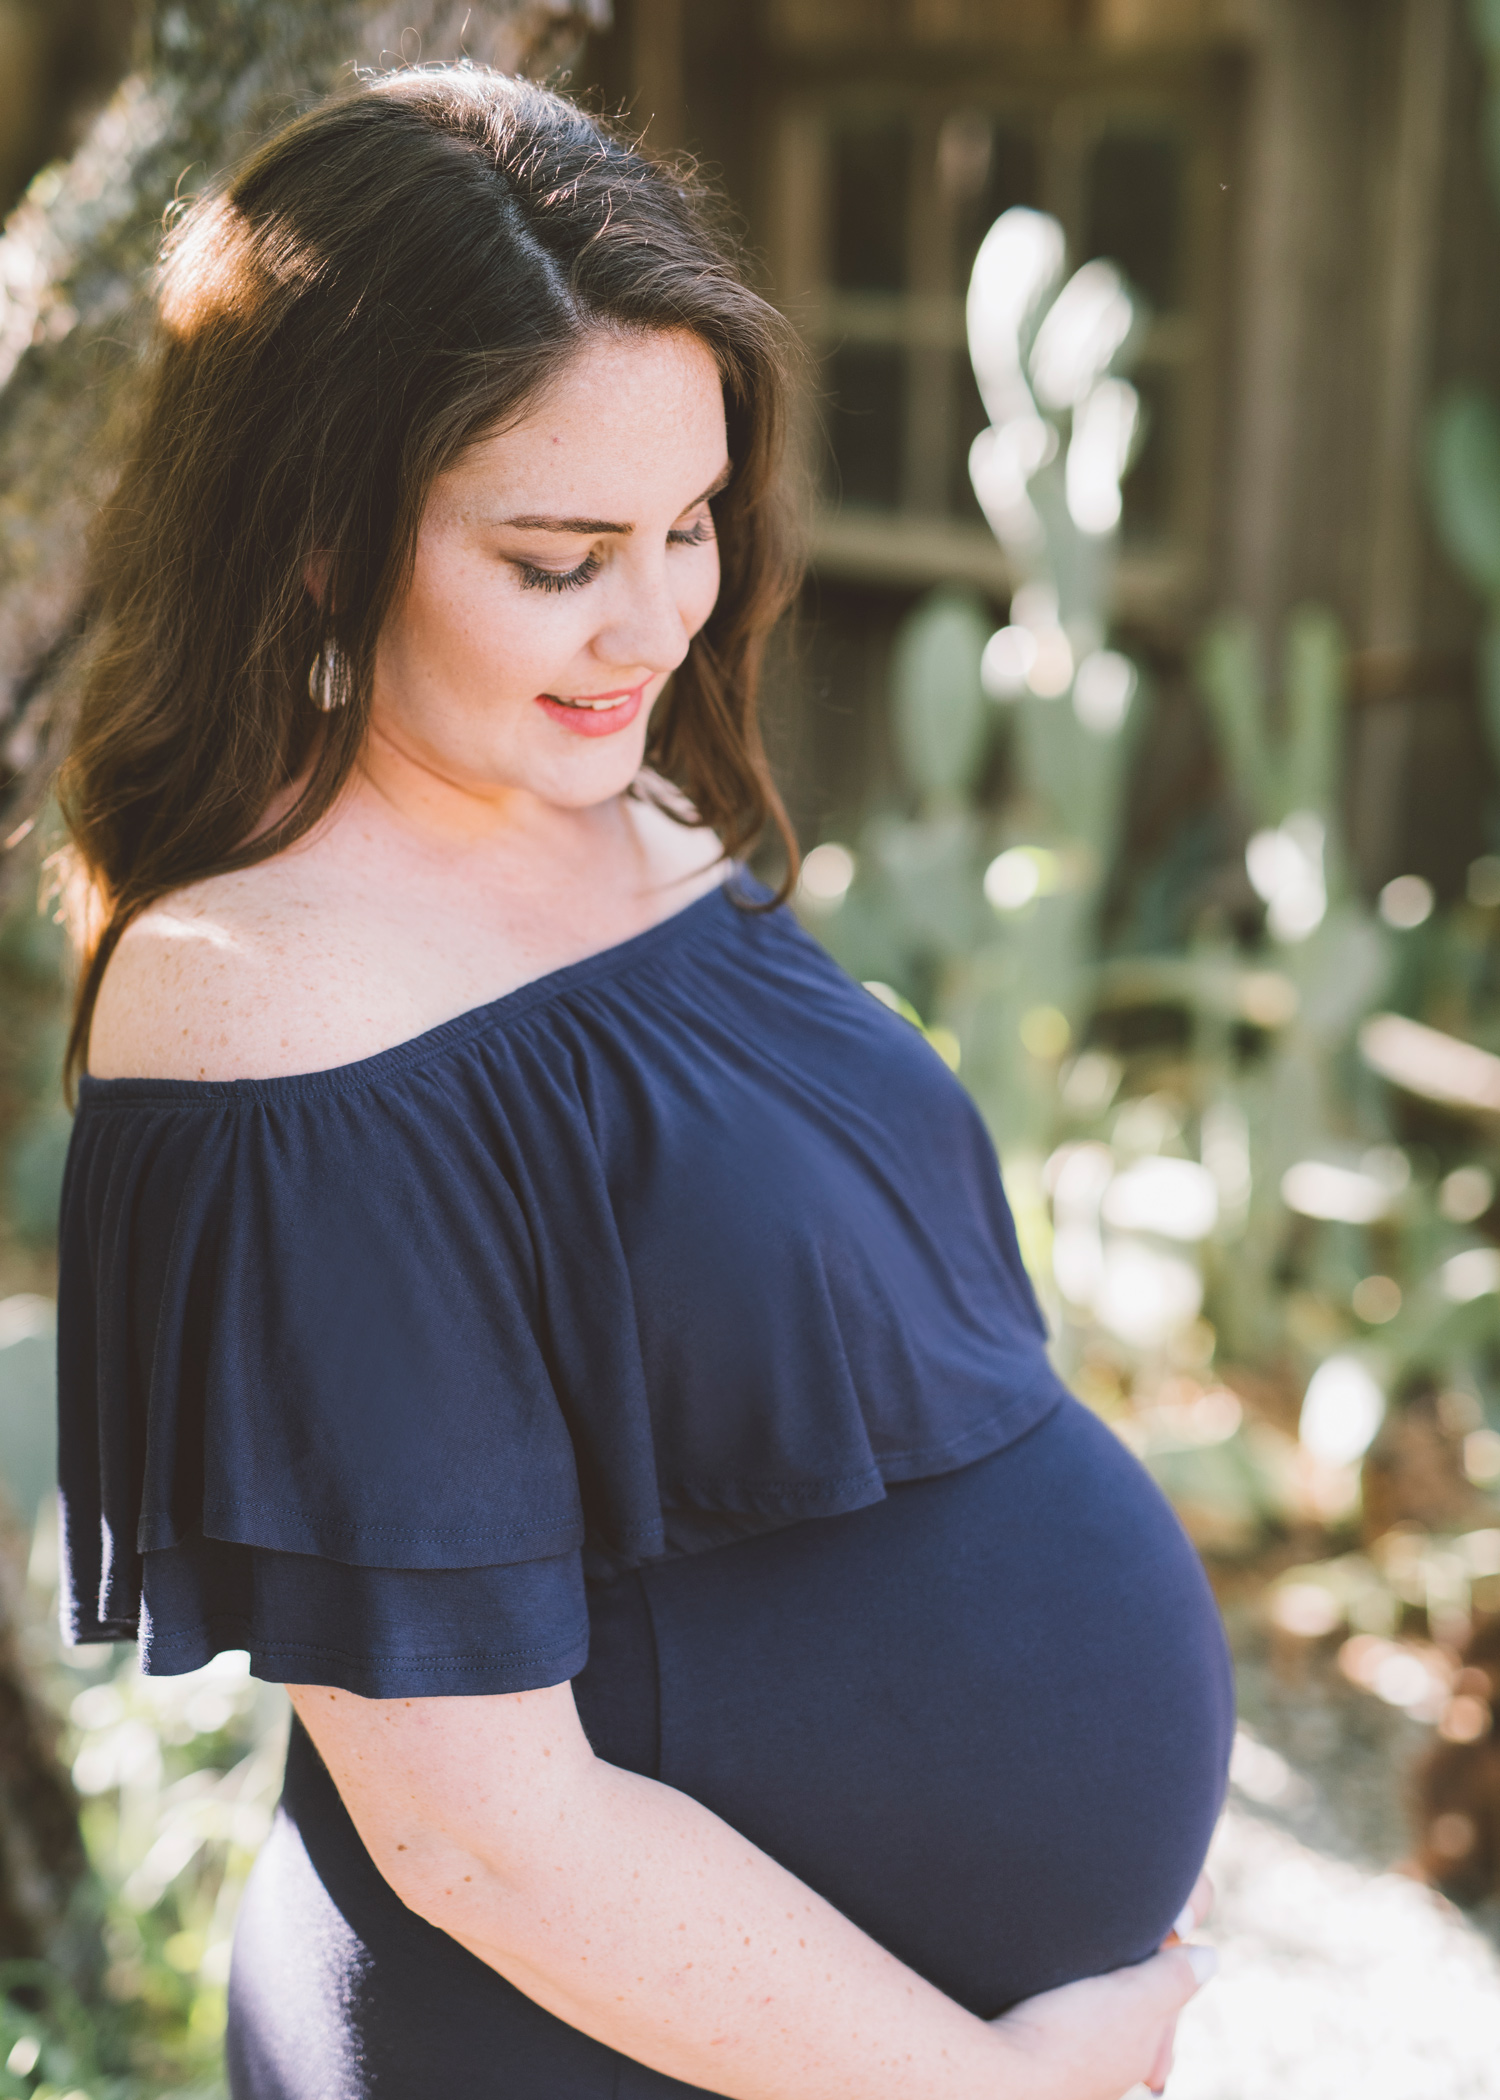 pregnant-woman-gazing-towards-her-growing-belly.jpg